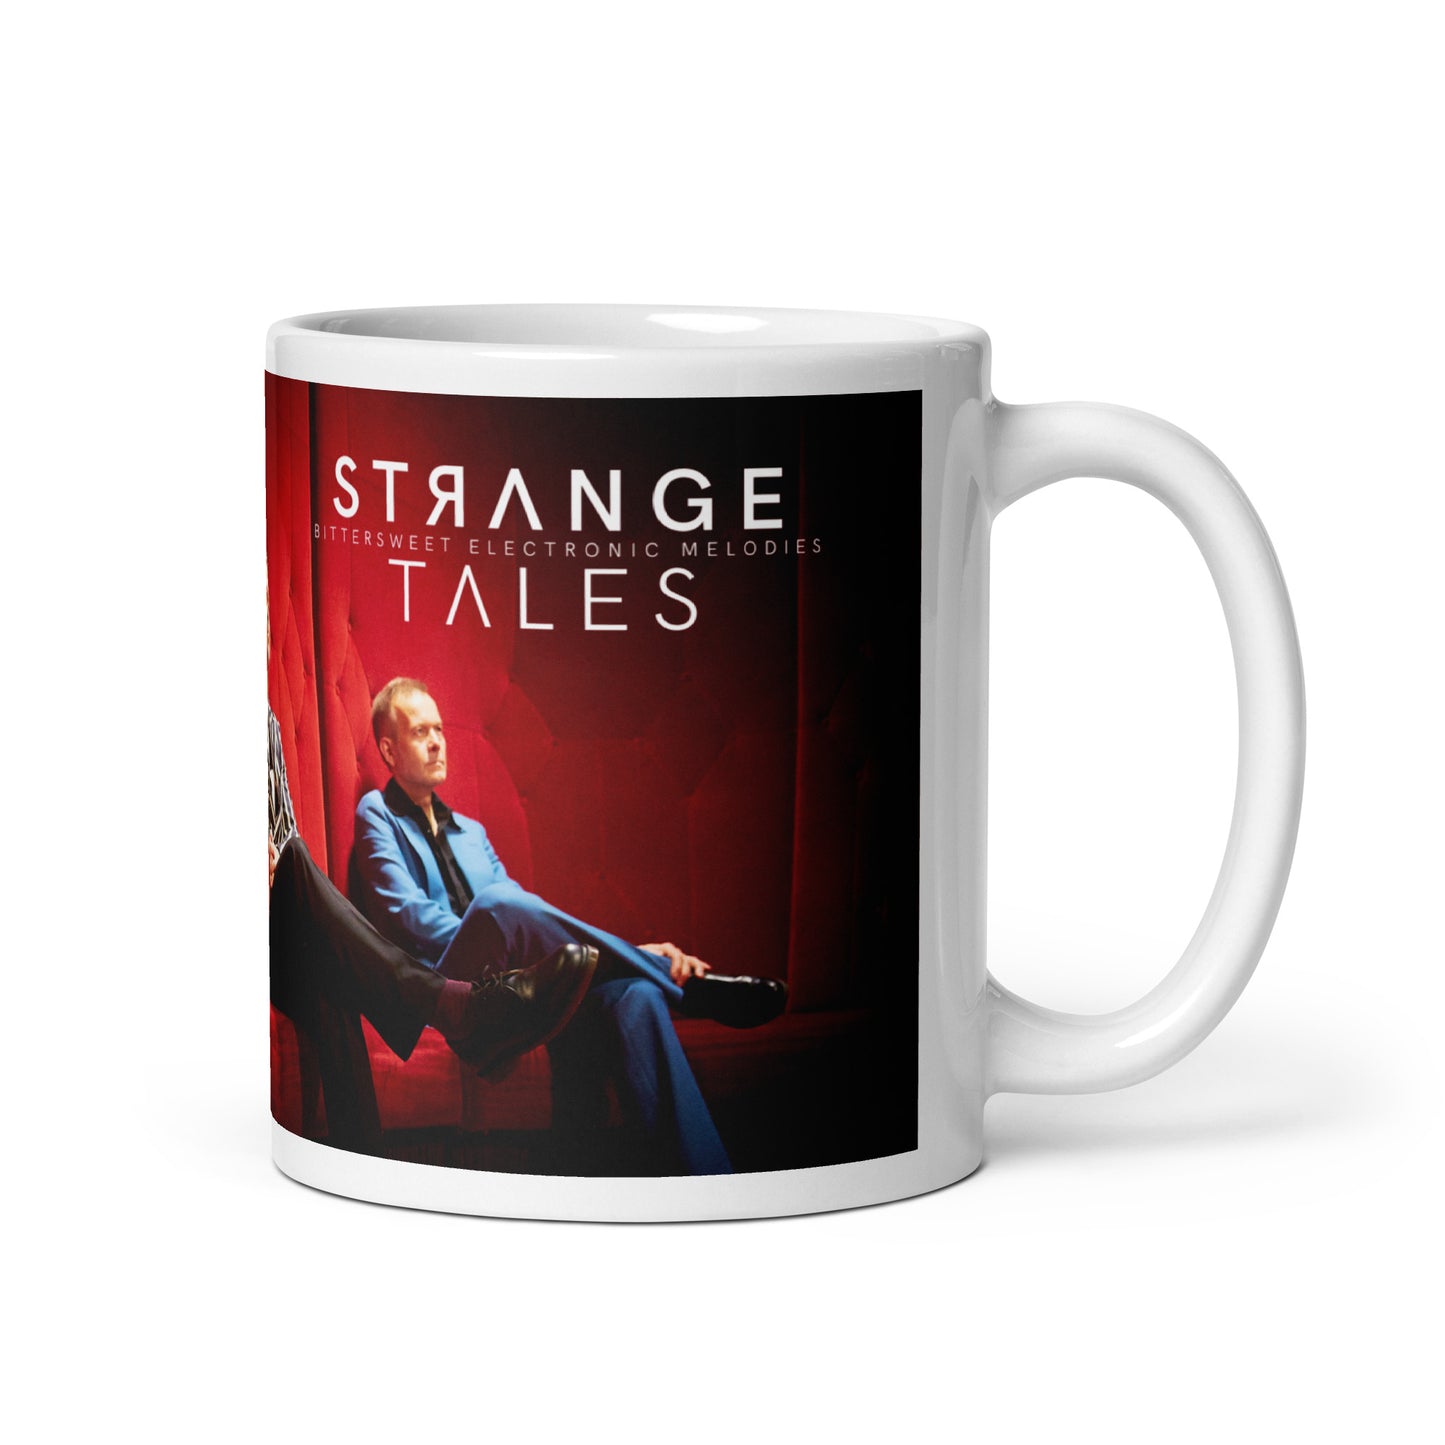 Strange Tales, official band photo and logo, White glossy mug